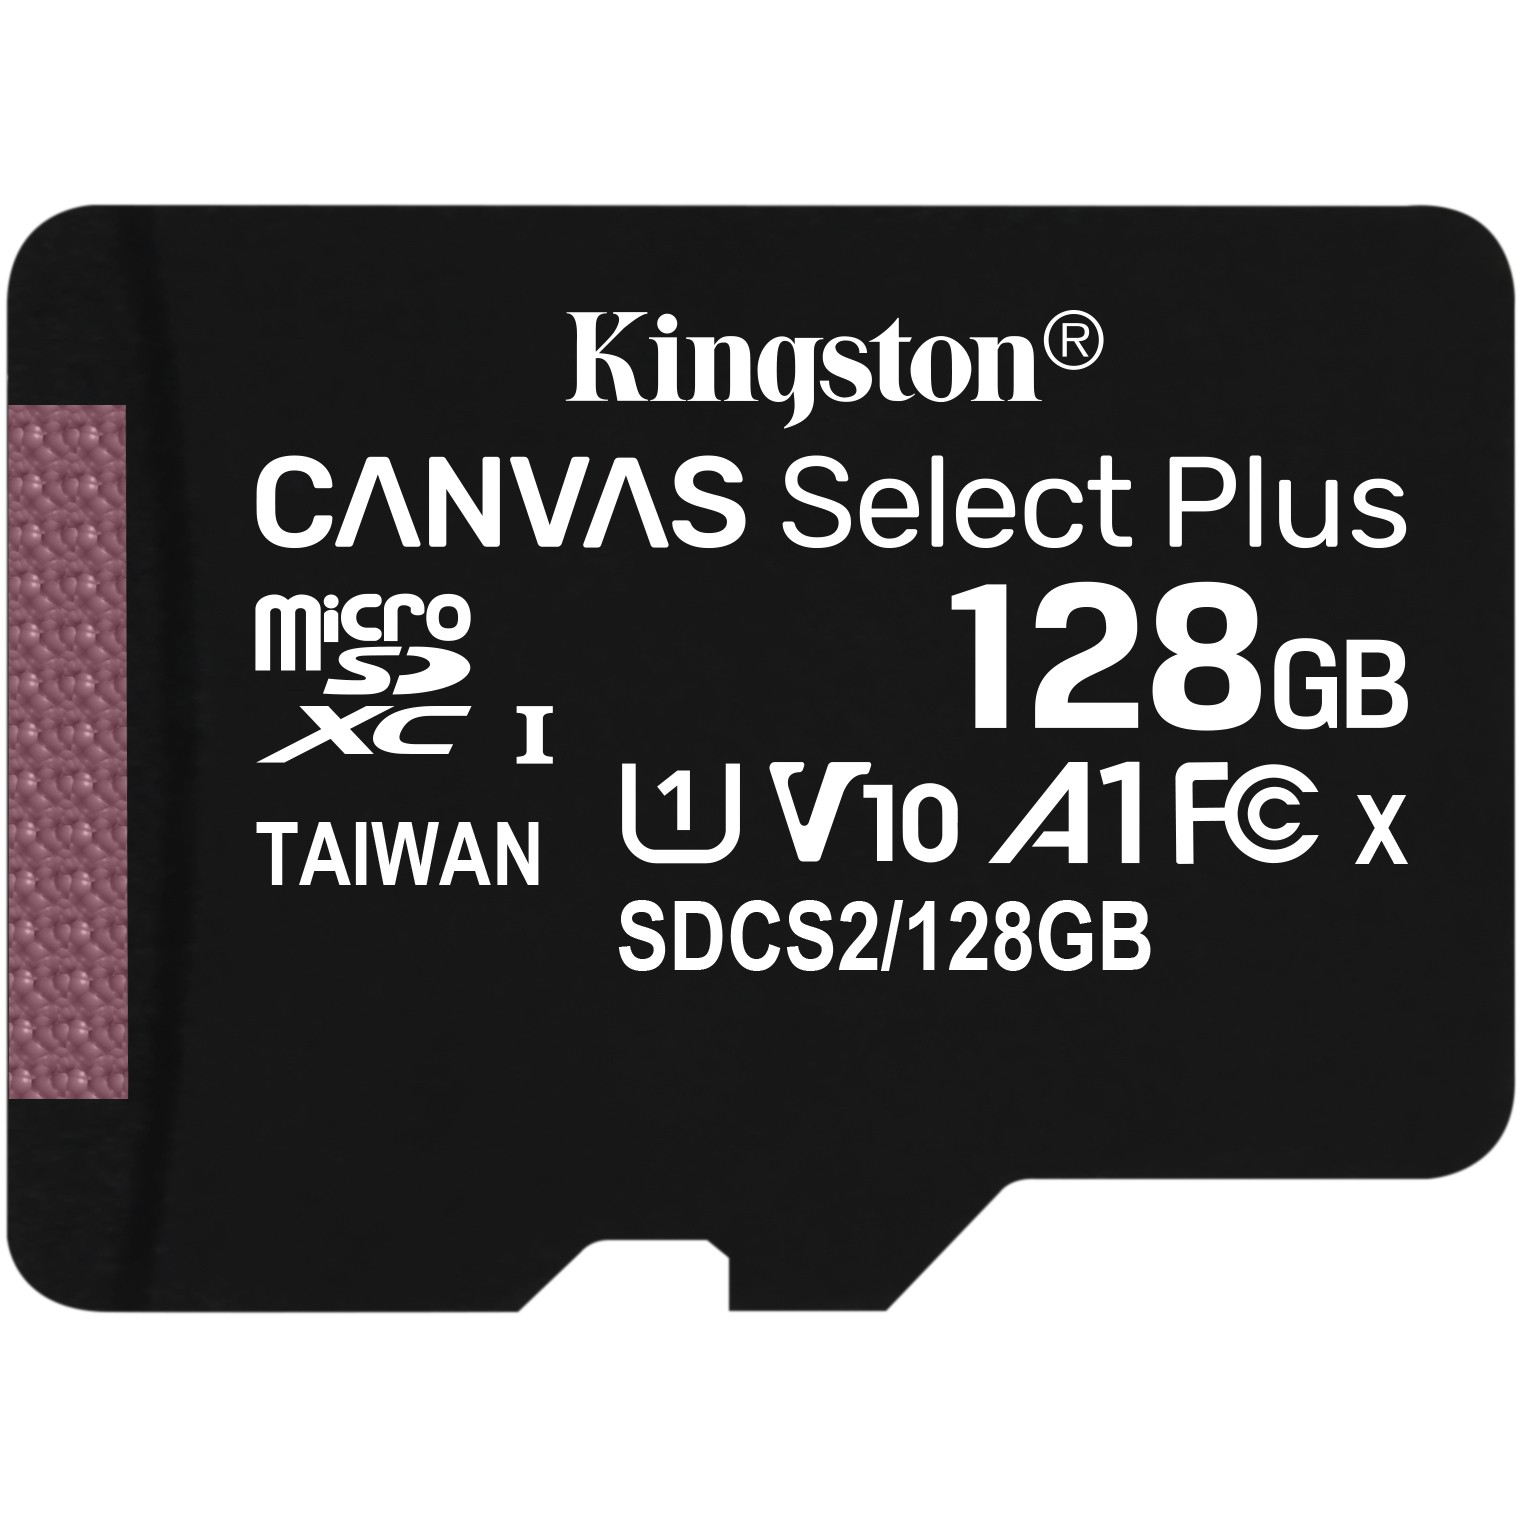 Kingston Technology Canvas Select Plus